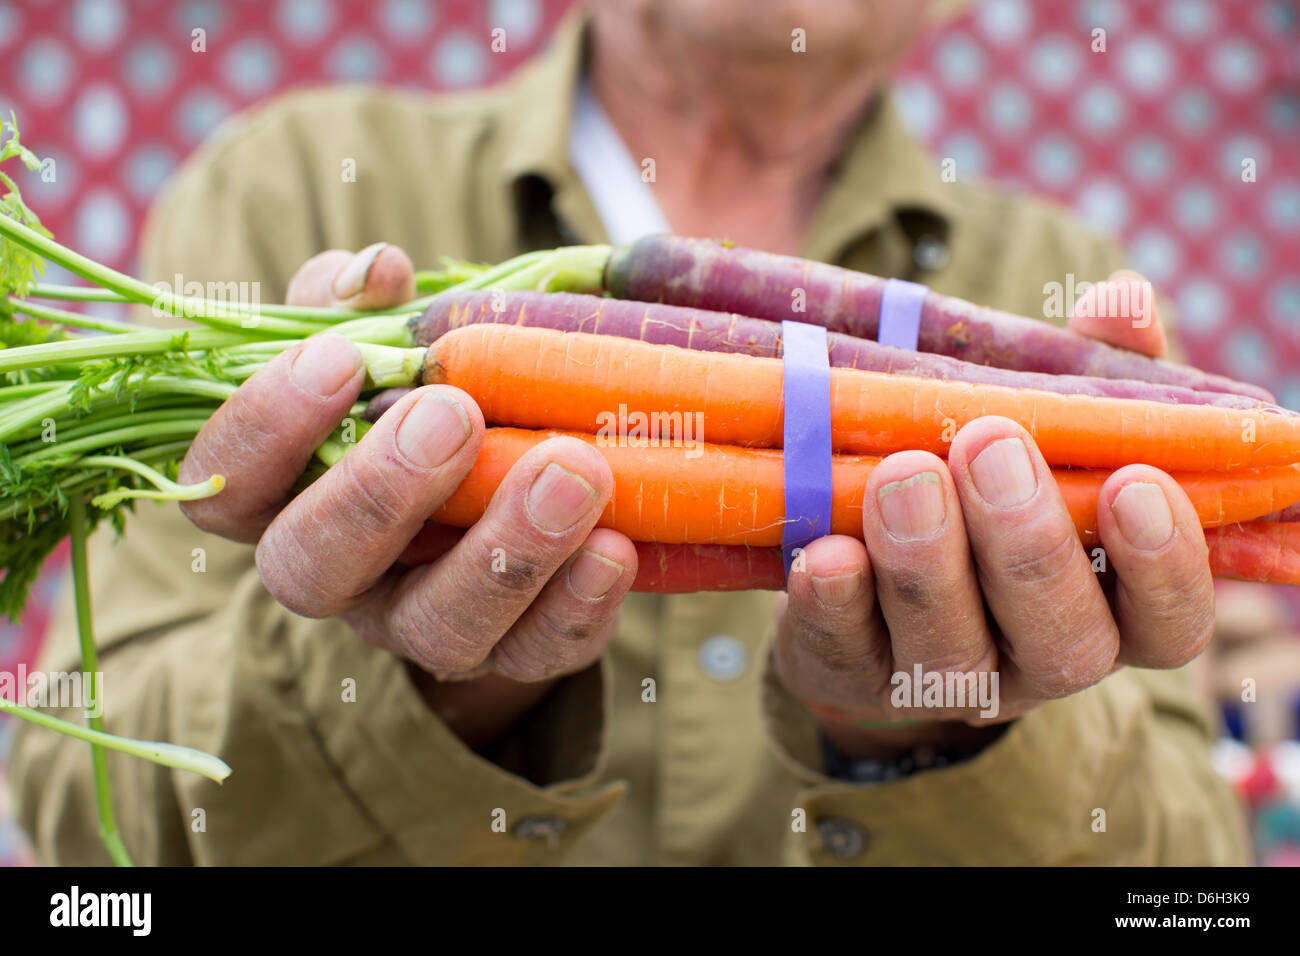 Man holding carrots outdoors Stock Photo